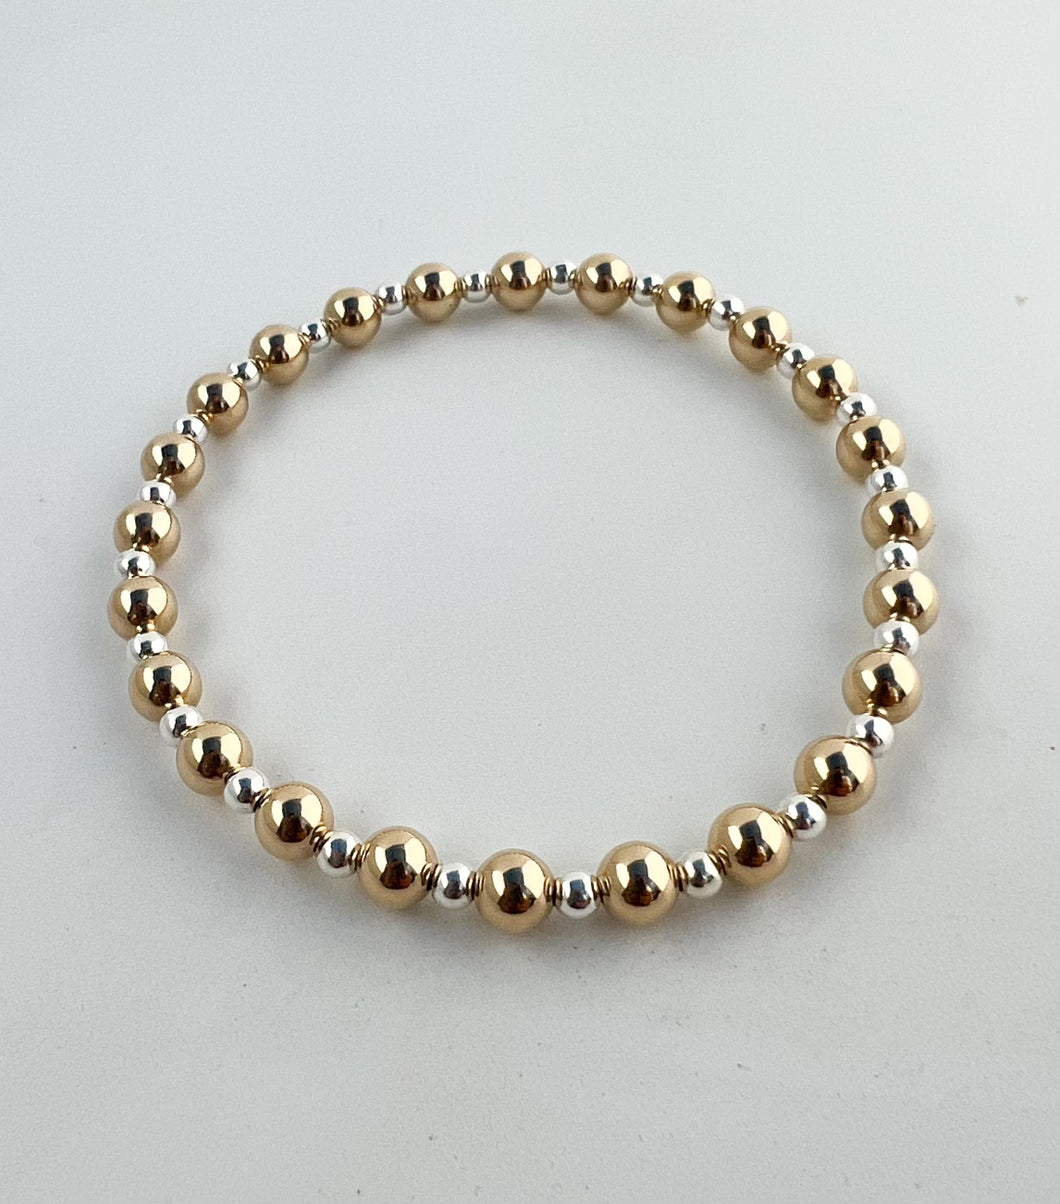 5mm gold/3mm silver bracelet